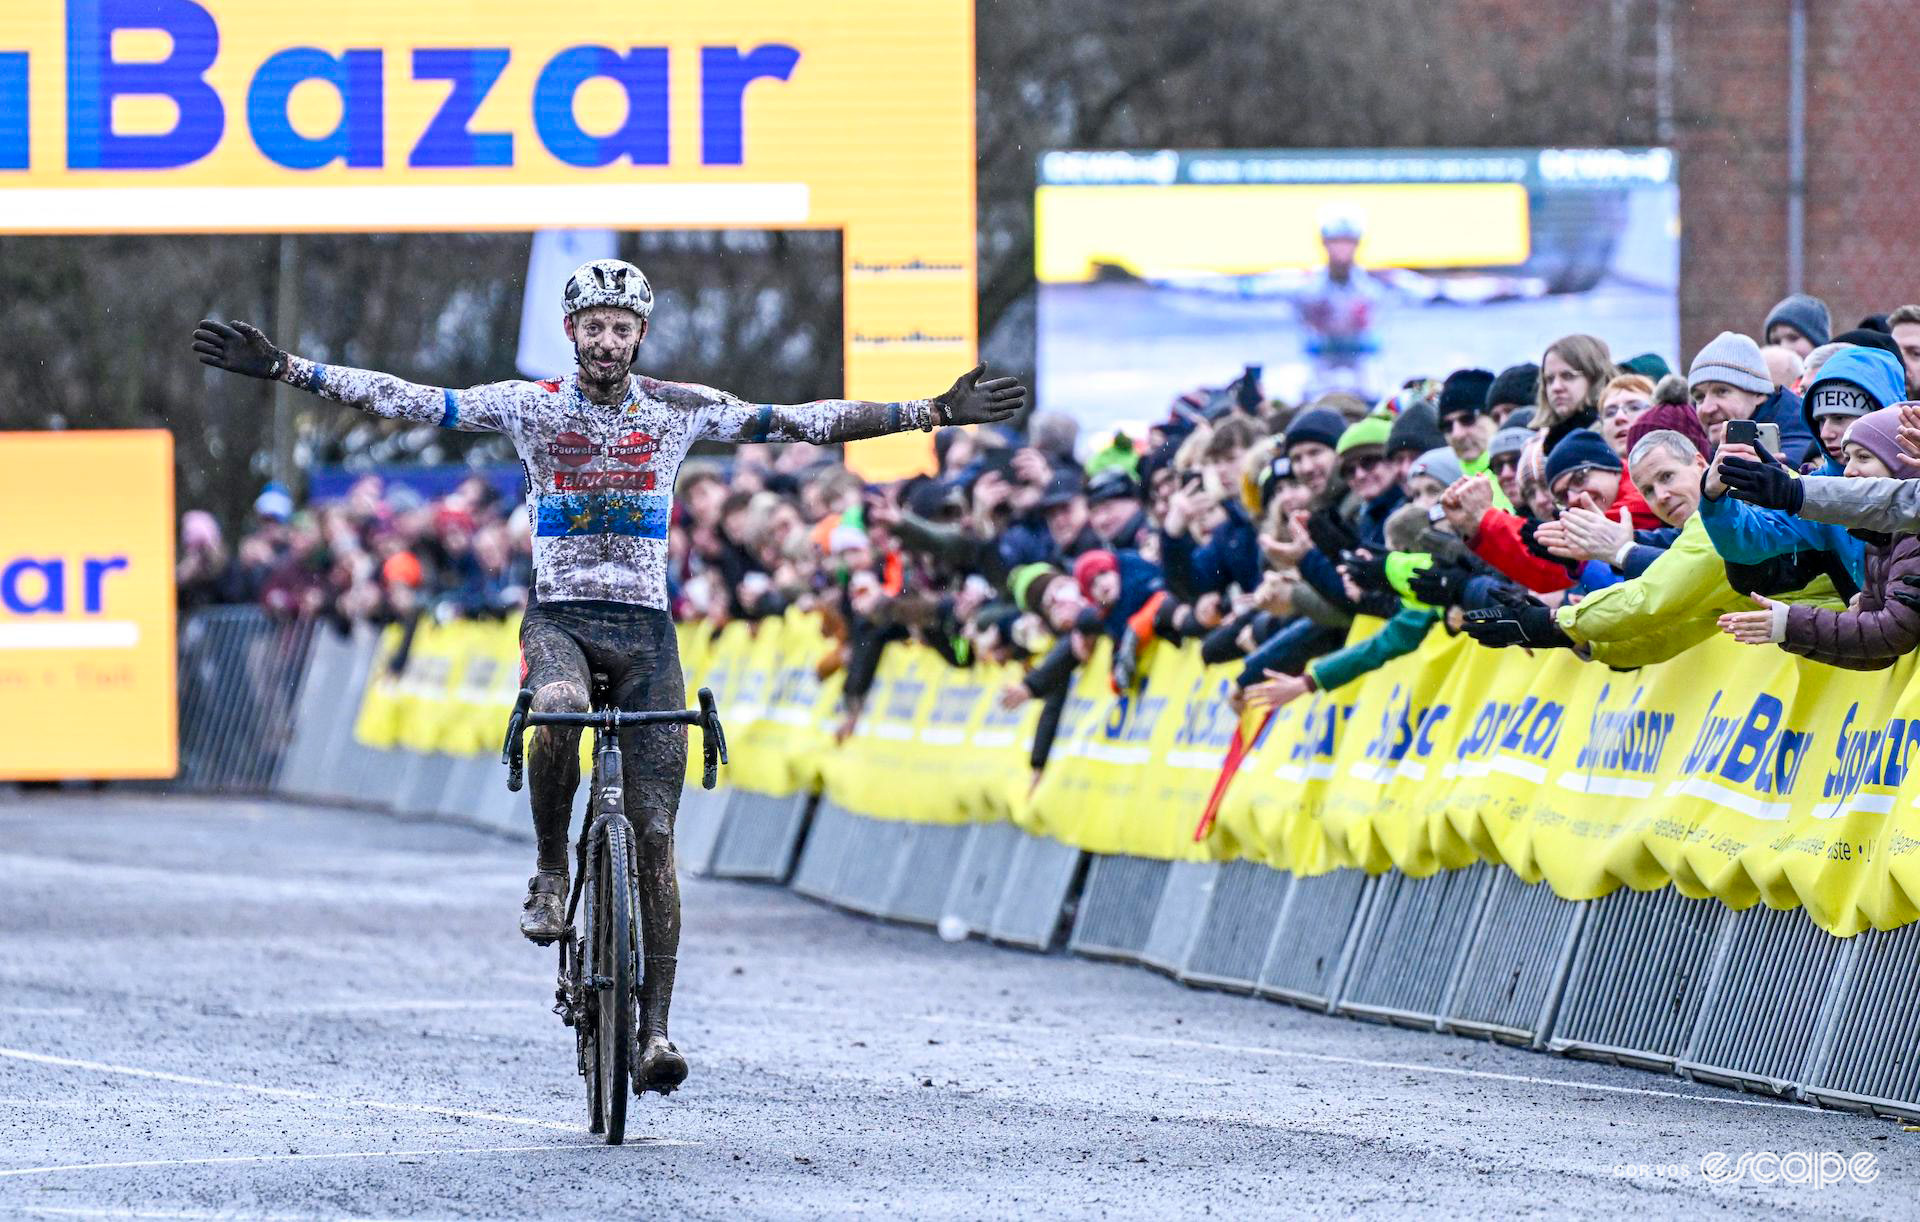 European champion Michael Vanthourenhout celebrates winning Hexia Cyclocross Gullegem, covered in splashes of mud.